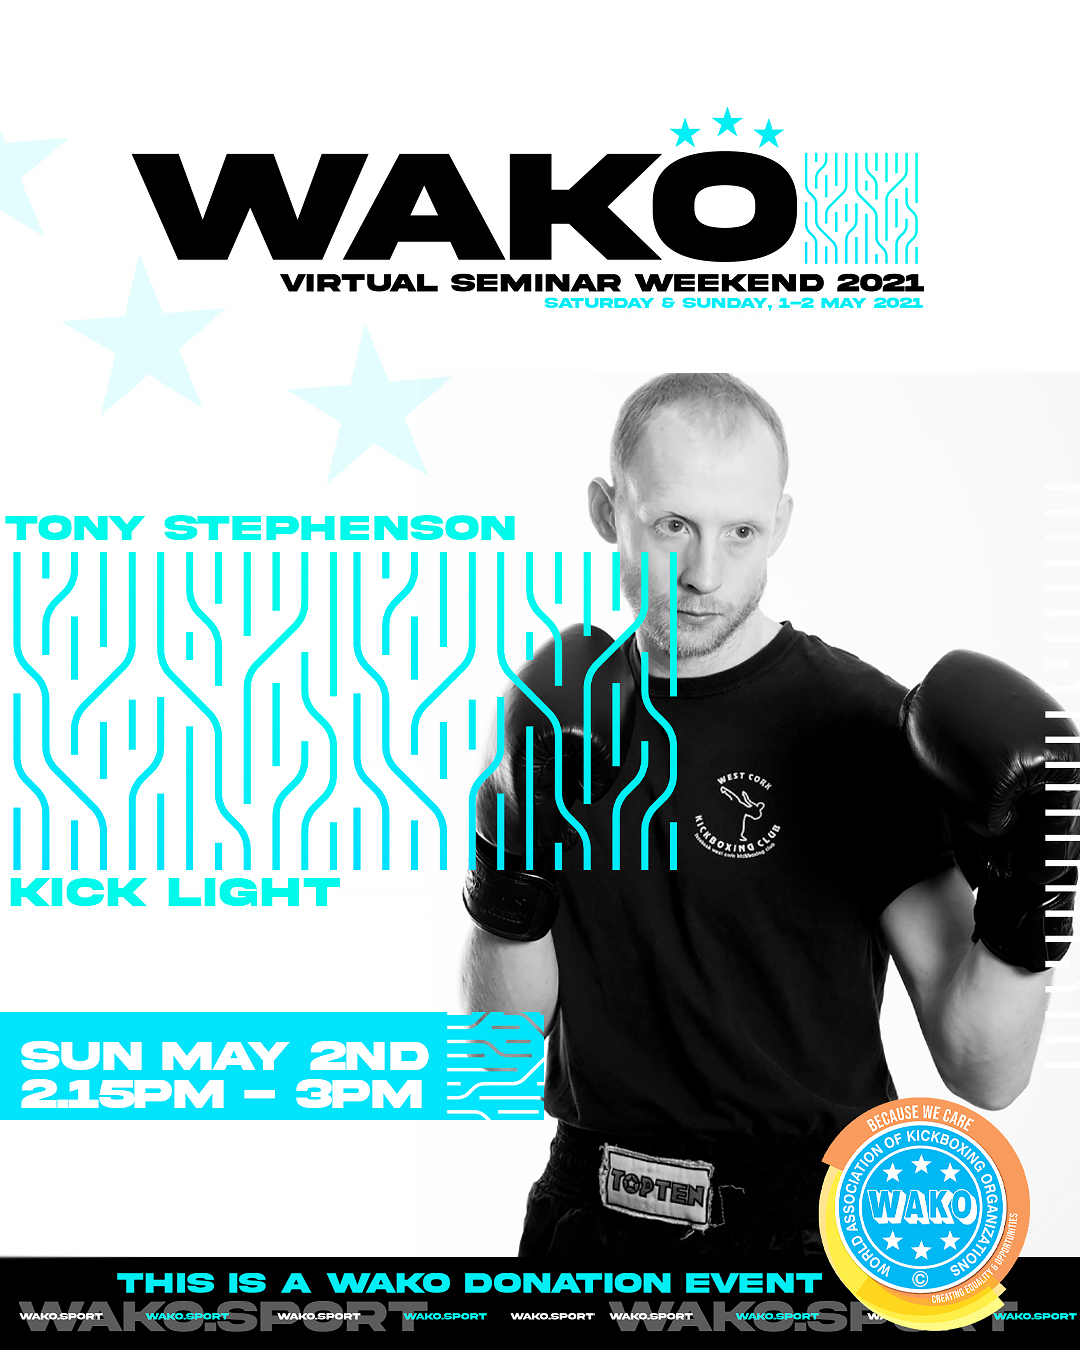 WAKO Virtual Seminar Weekend 2021 - 2 May 2:15-3:15 pm GMT - KICK LIGHT Tony Stephenson (Ireland)